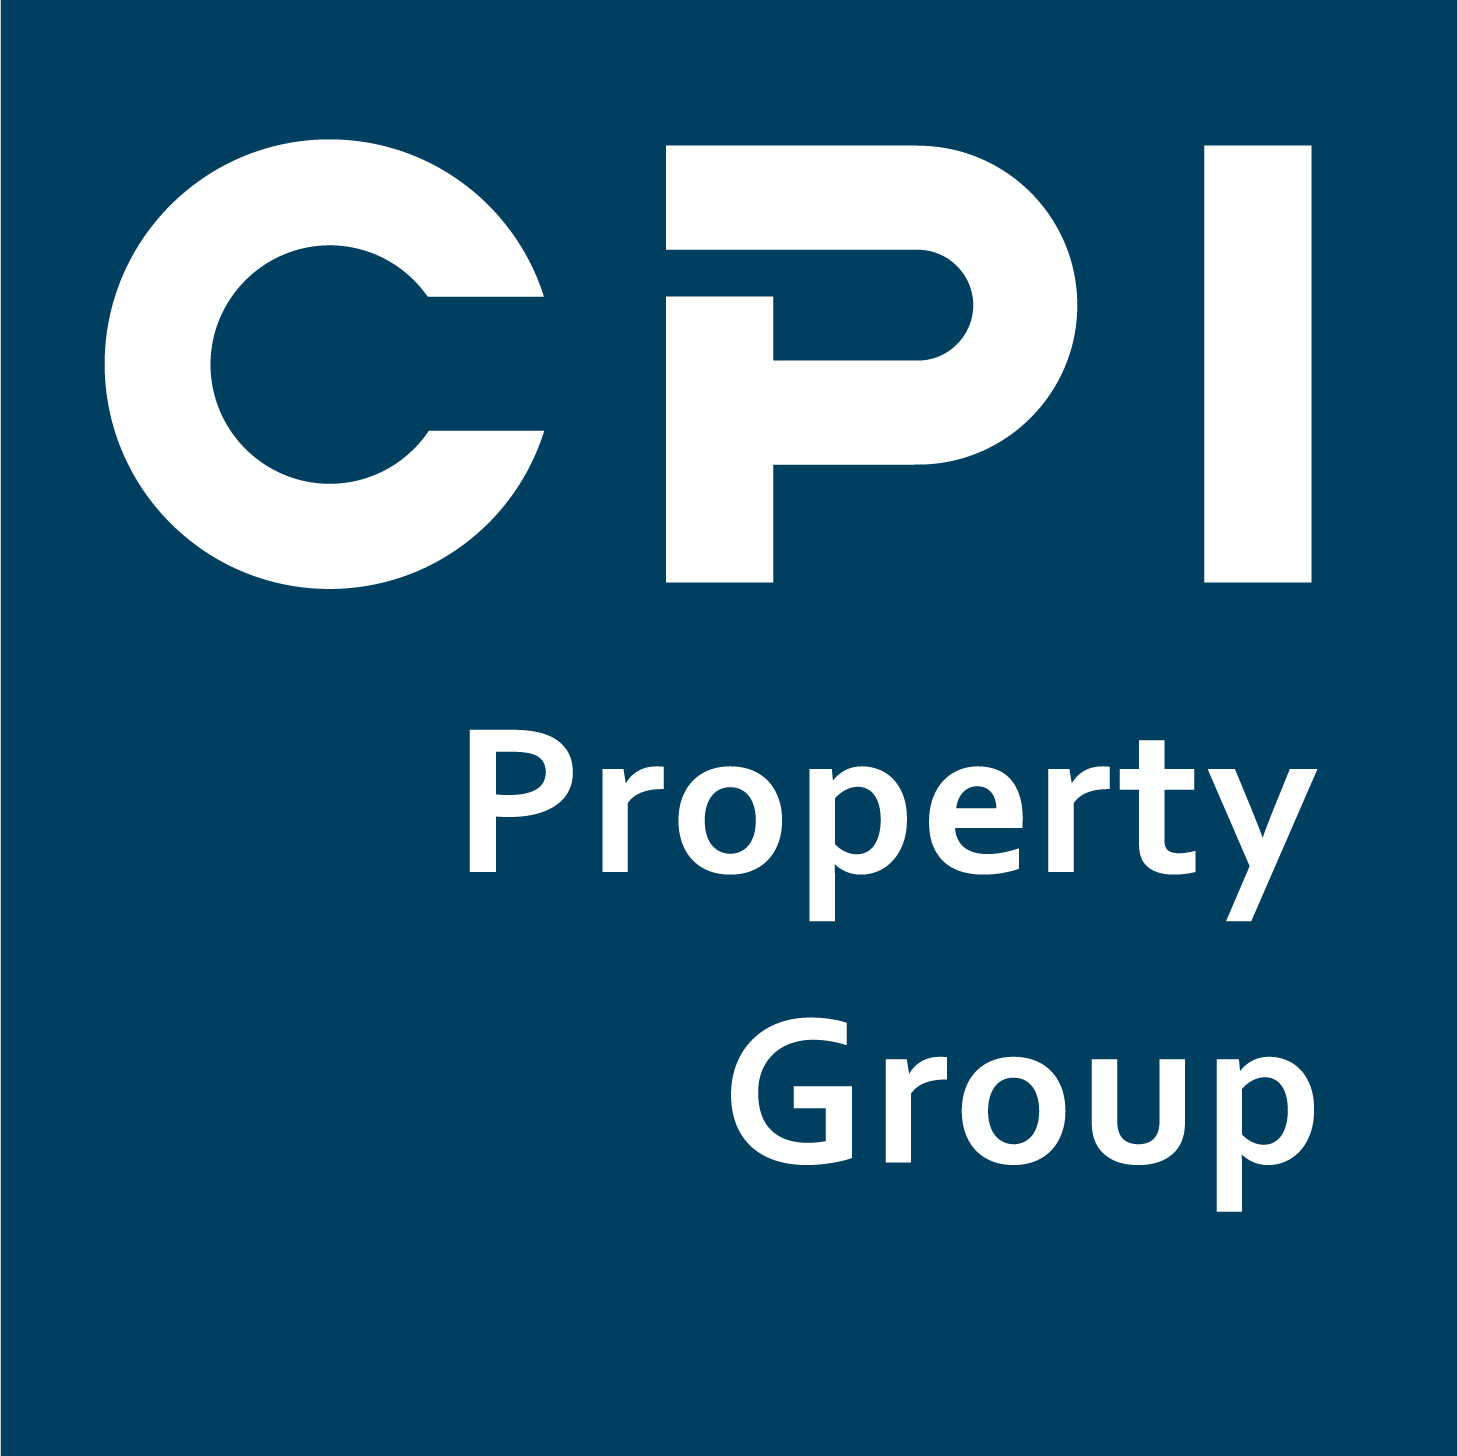 CPI Property Group Logo png